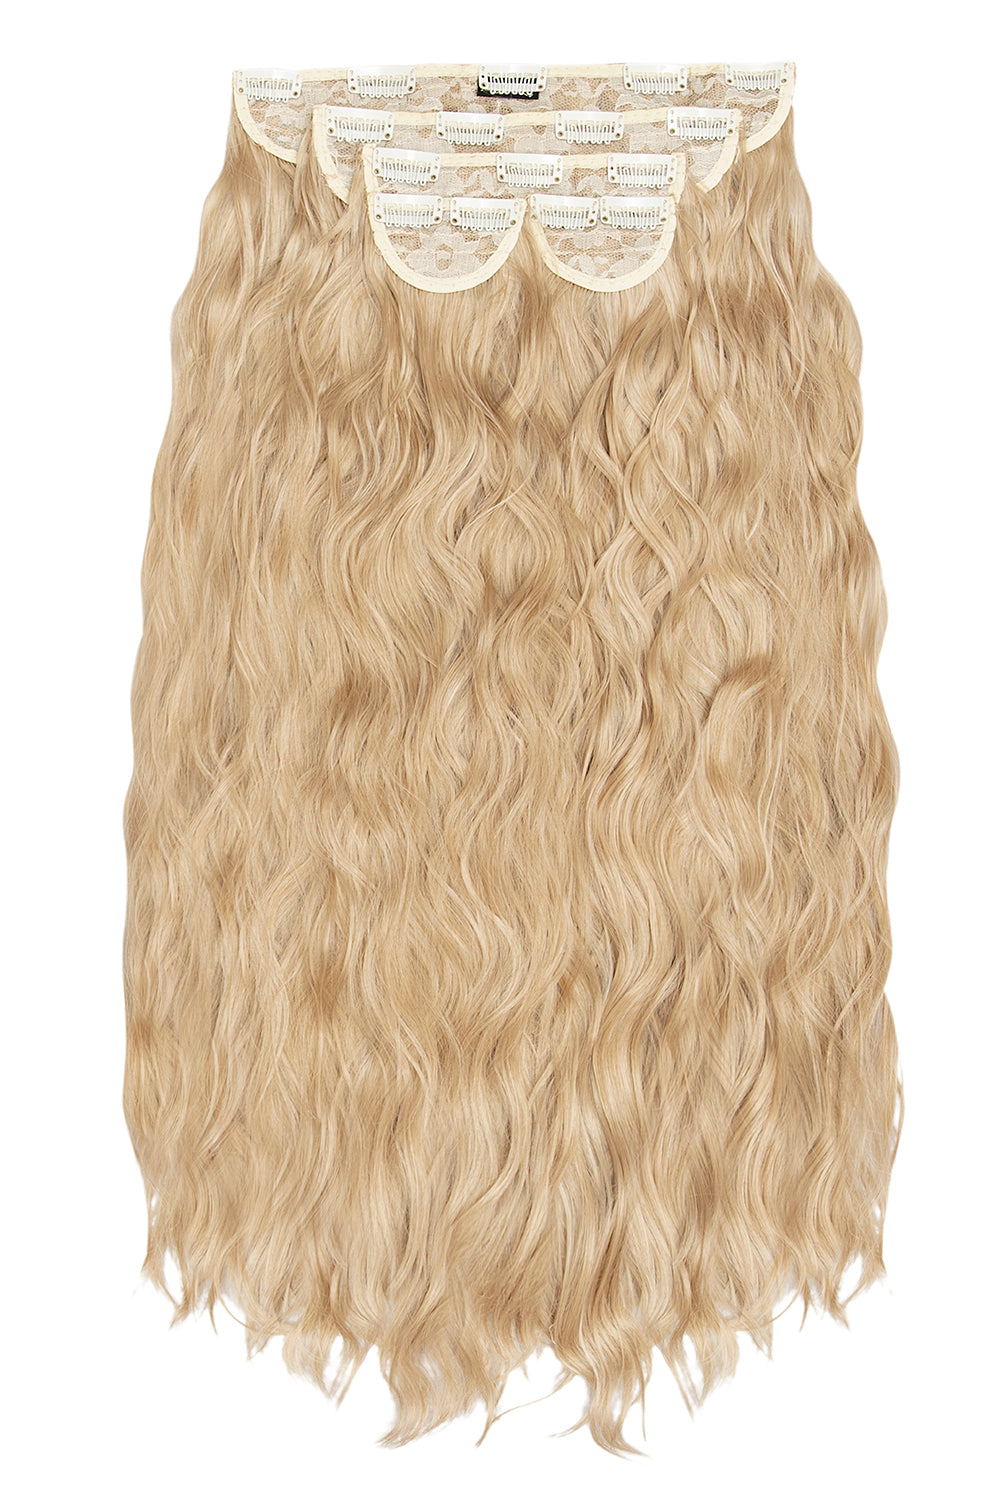 Super Thick 26" 5 Piece Waist Length Wave Clip In Hair Extensions - LullaBellz  - Honey Blonde Festival Hair Inspiration